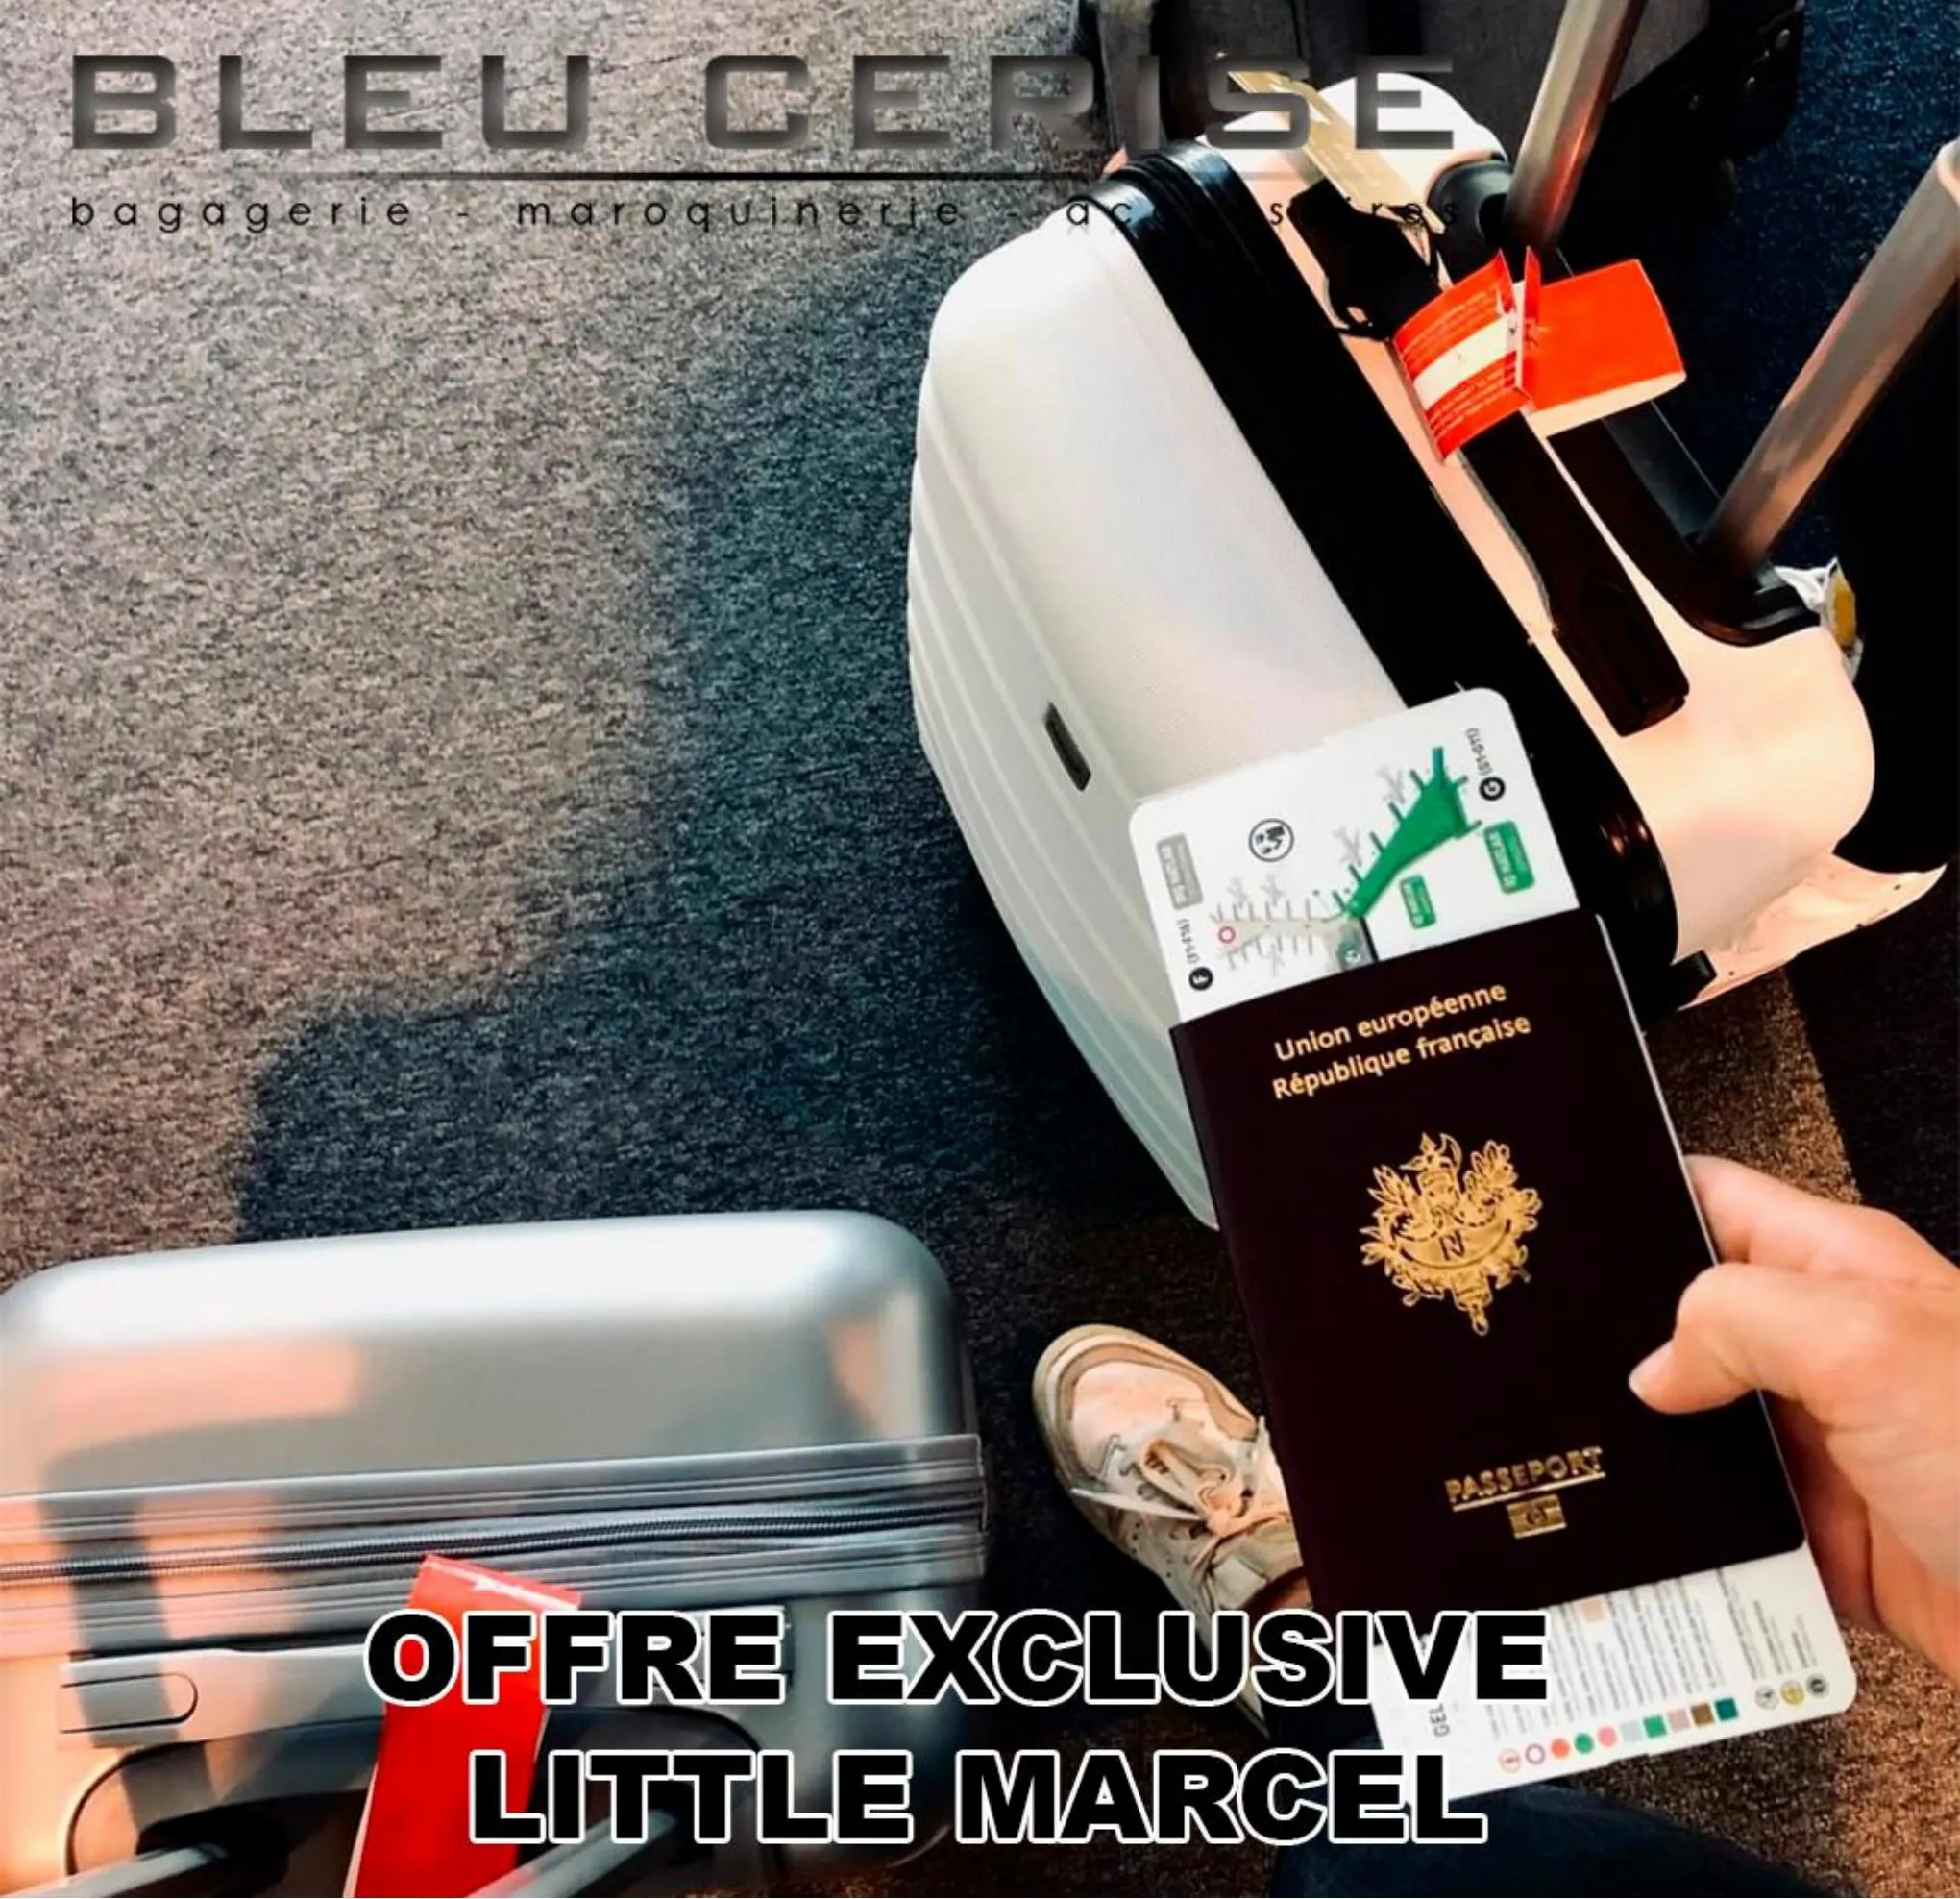 Catalogue Offre exclusive Little Marcel, page 00001